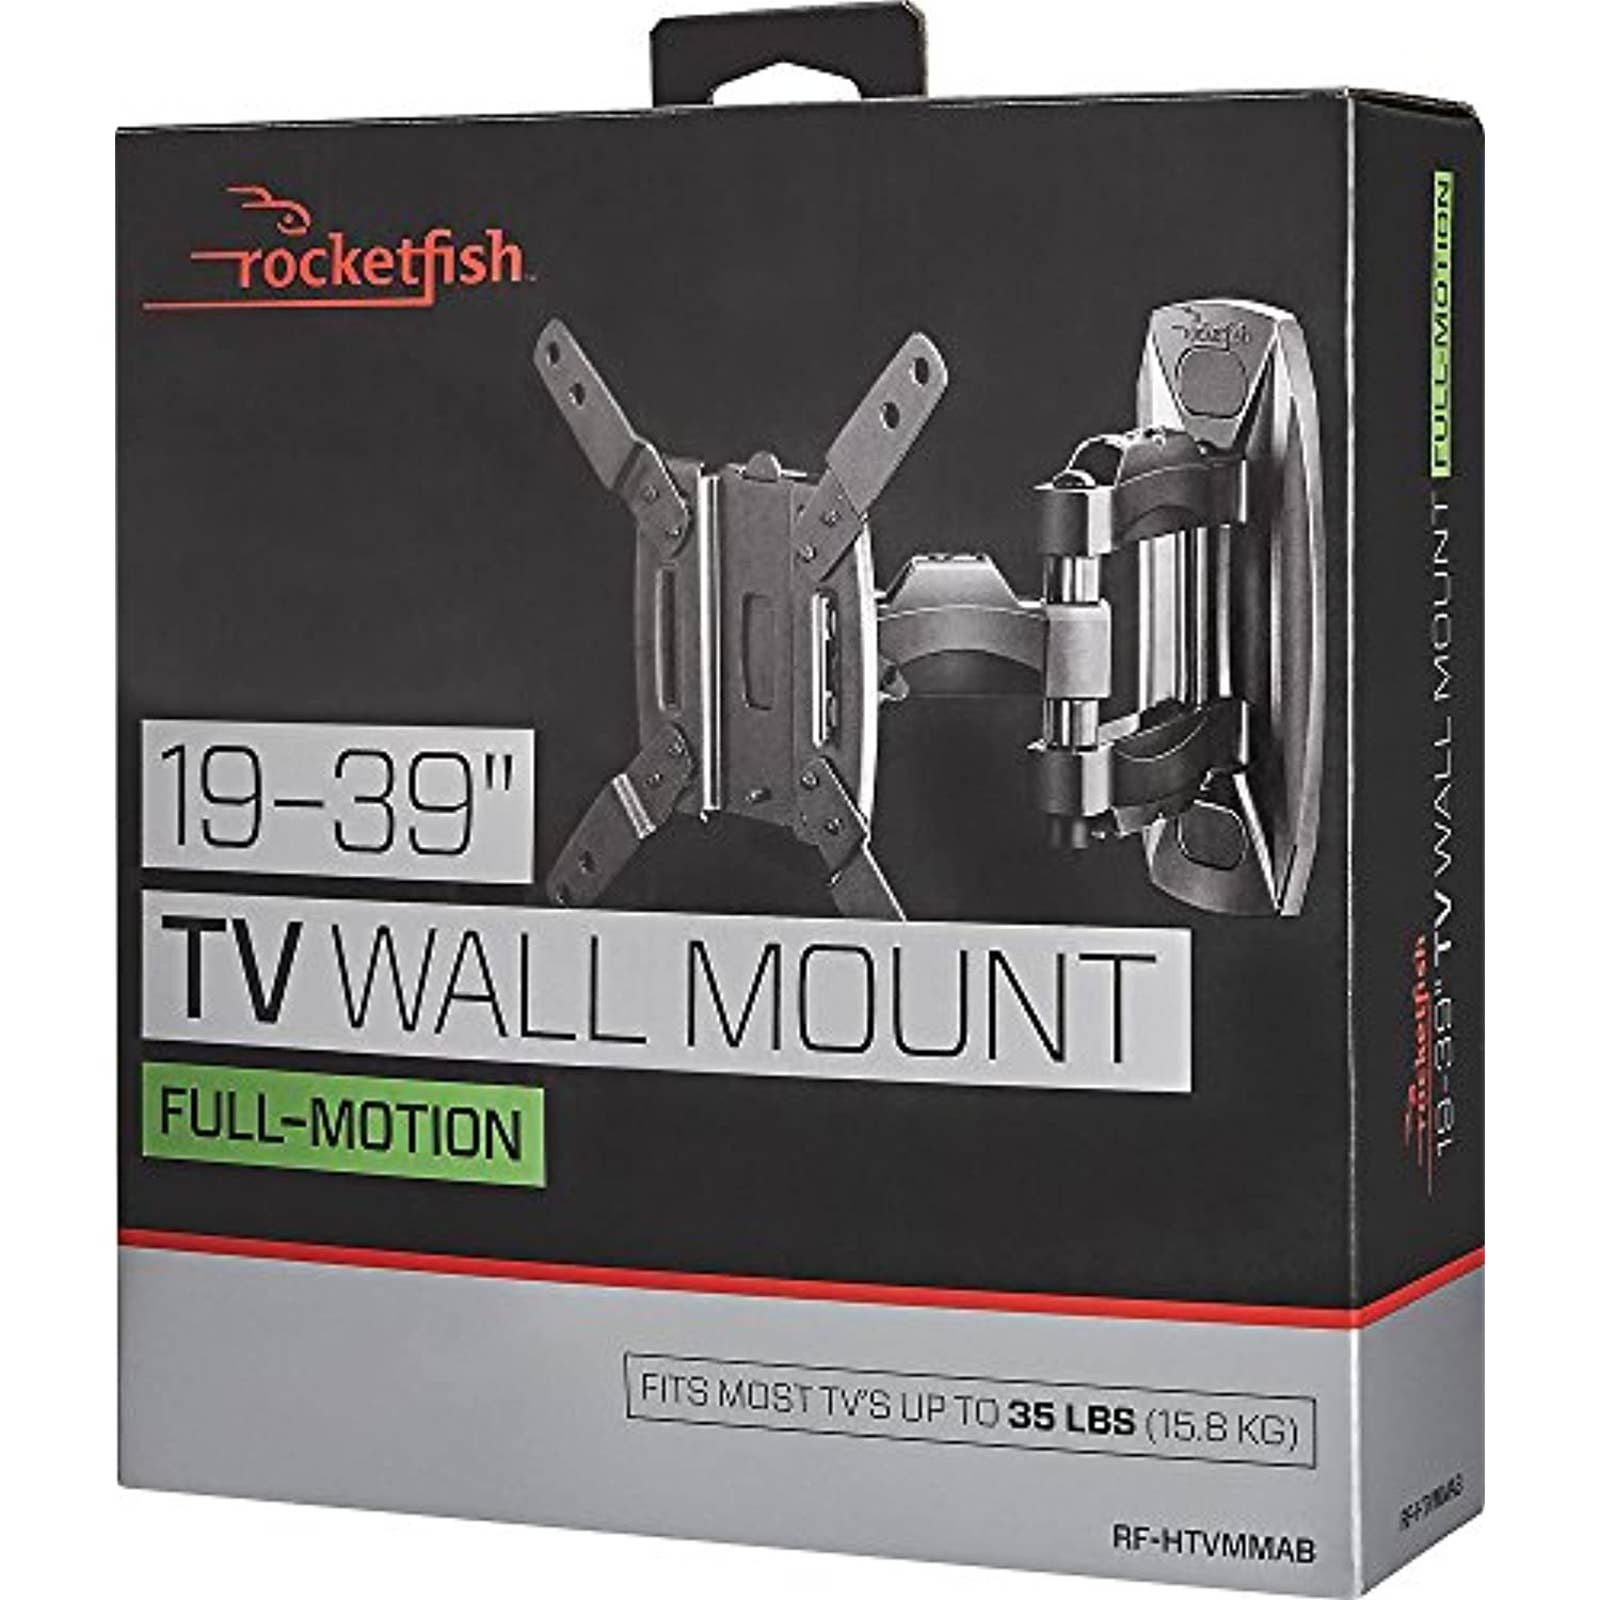 Rocketfish - RF-HTVMMAB Full-motion Tv Wall Mount for Most 19"-39" Lcd TVs - Black